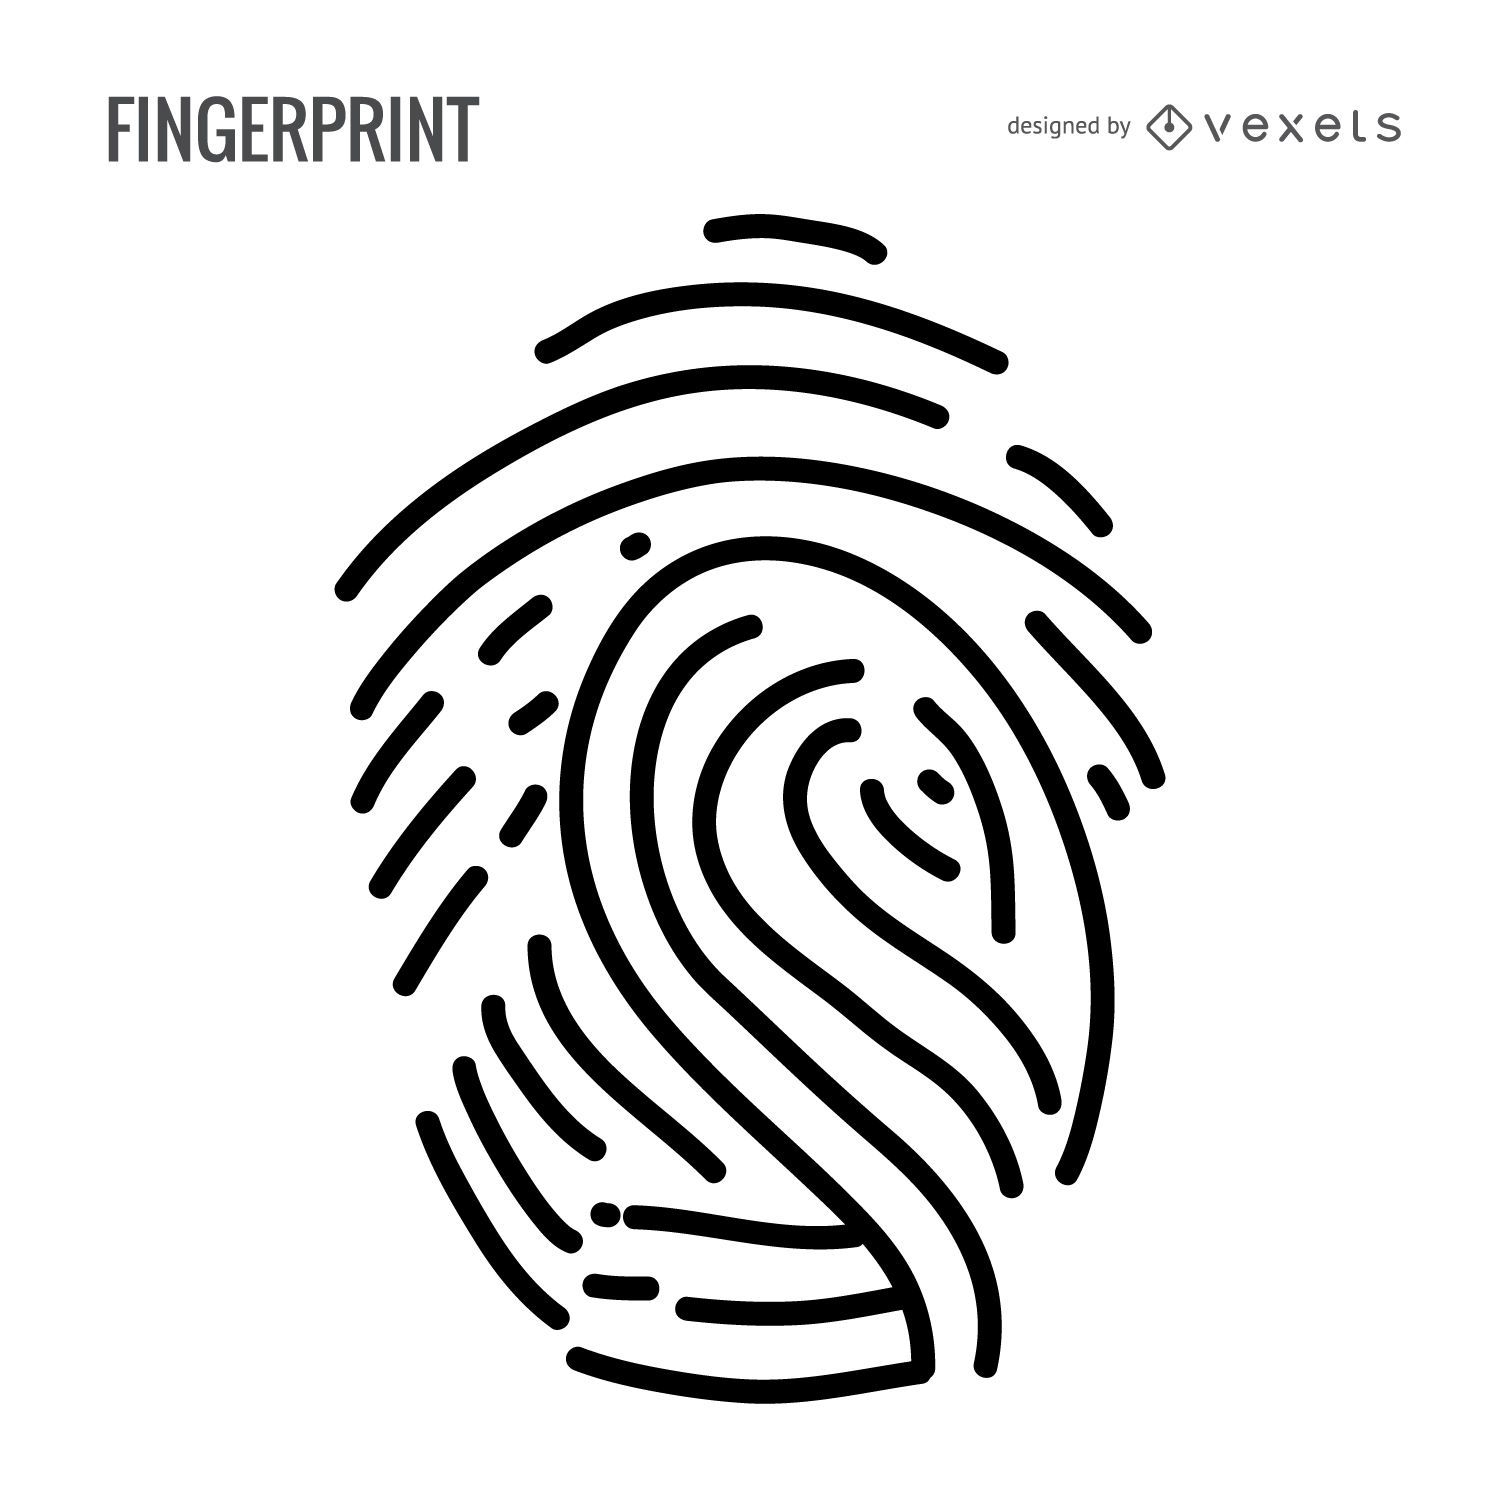 Minimalist fingerprint illustration